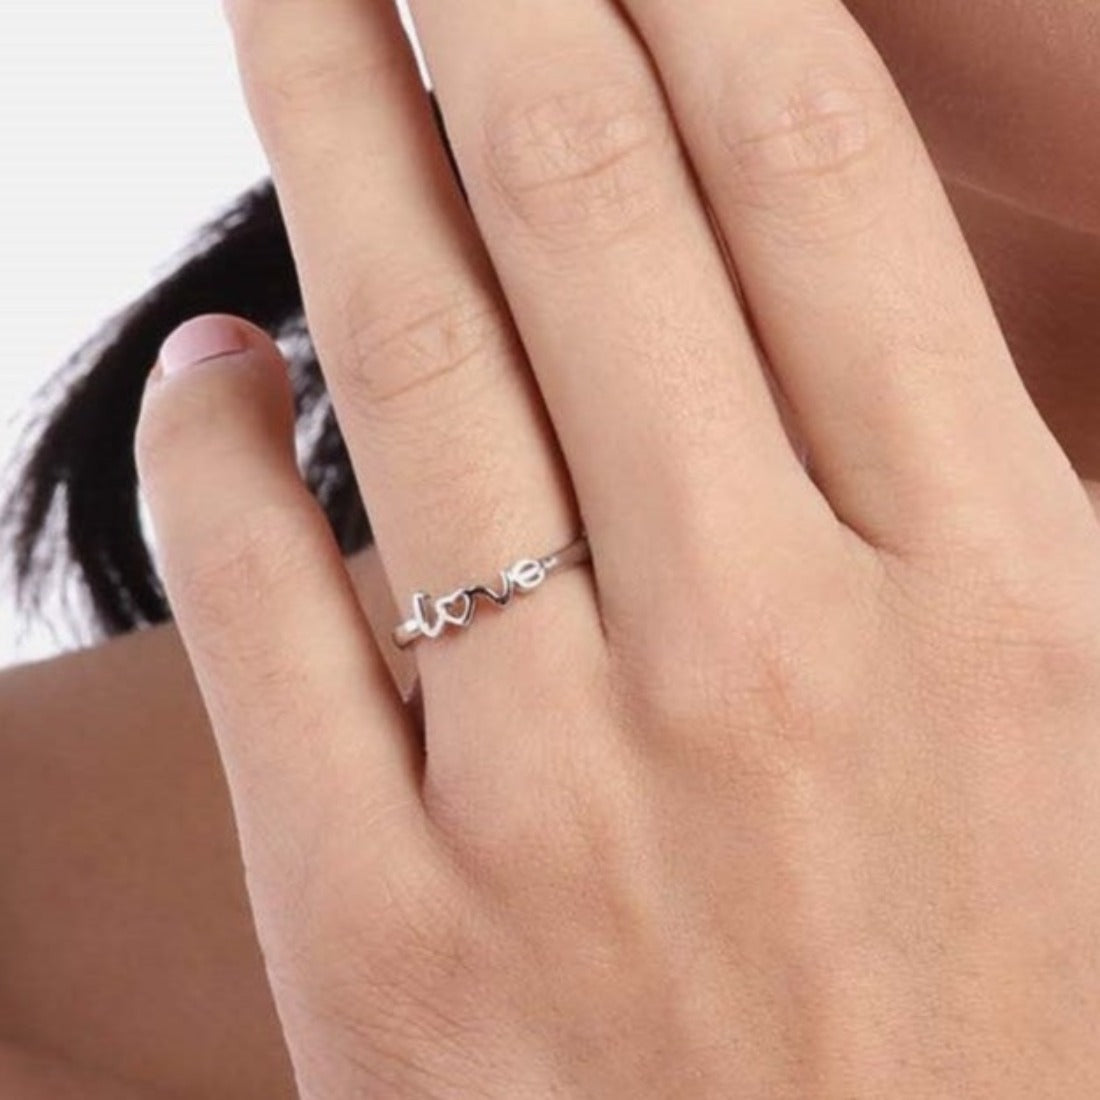 Love 925 Sterling Silver Female Ring (Adjustable)